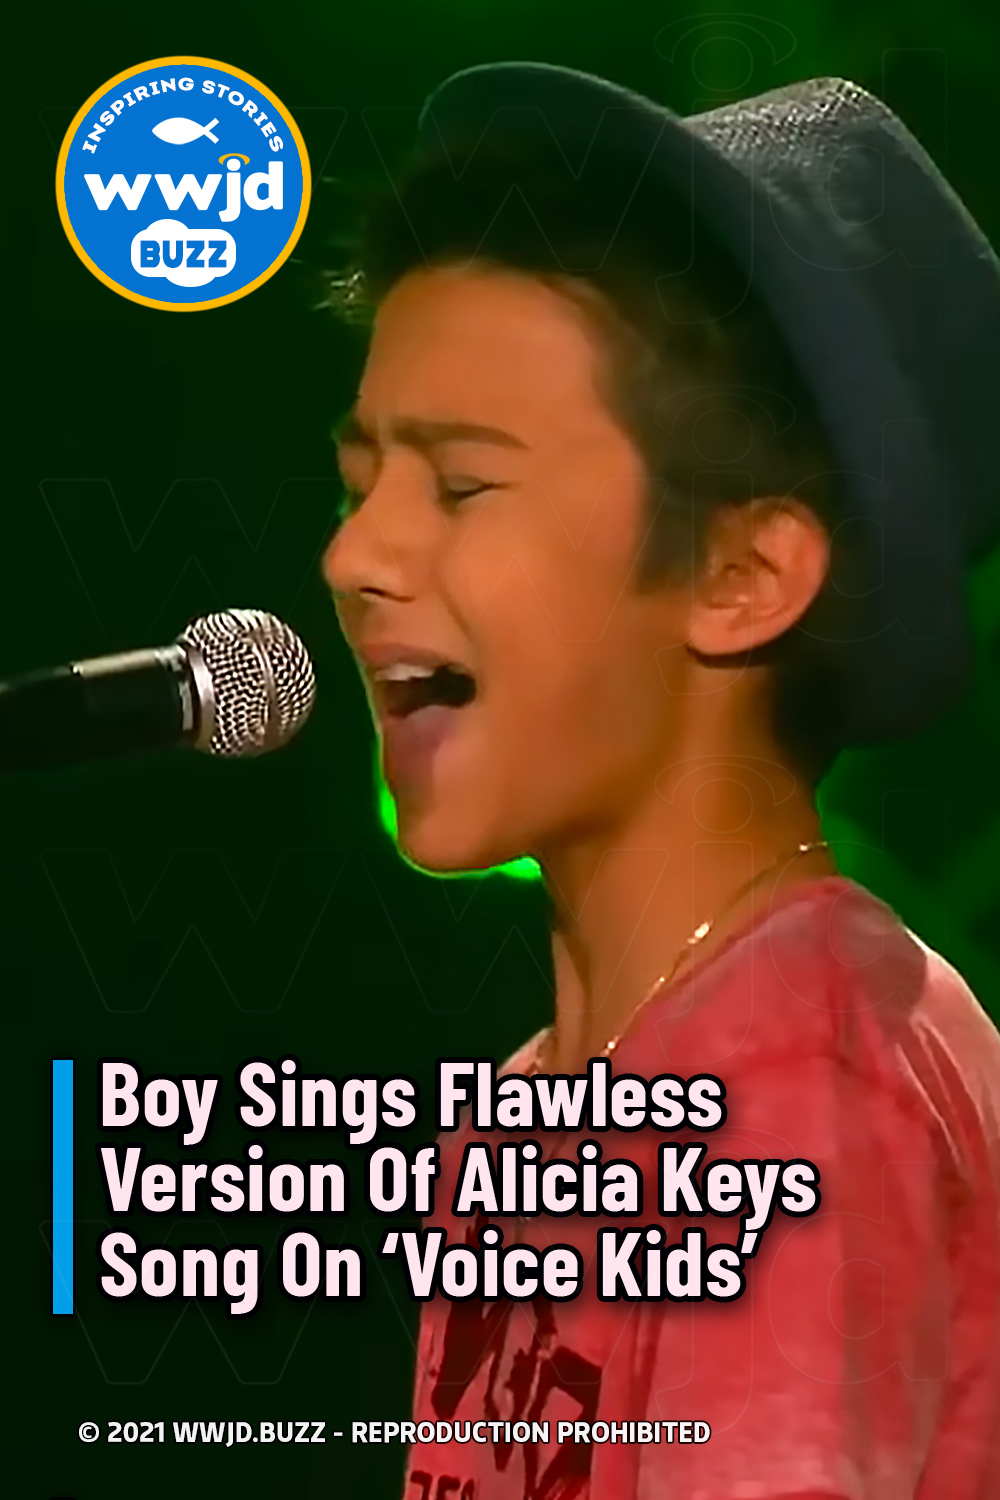 Boy Sings Flawless Version Of Alicia Keys Song On \'Voice Kids\'